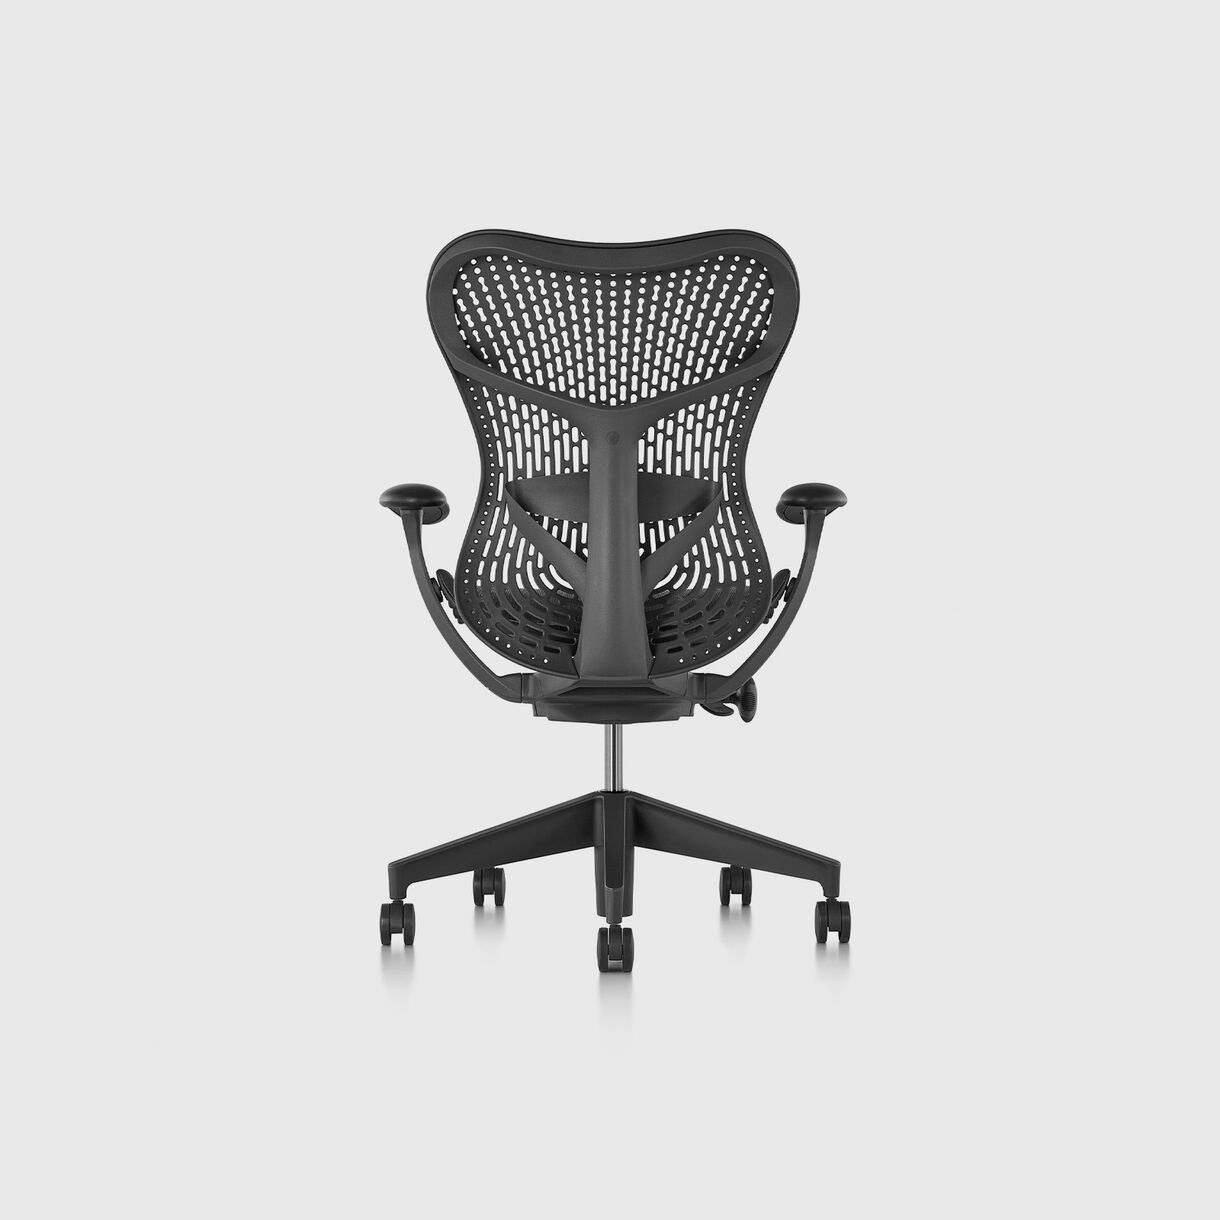 Mirra 2 Work Chair - TriFlex Graphite, Graphite Base & Frame - Fully Adjustable Arms